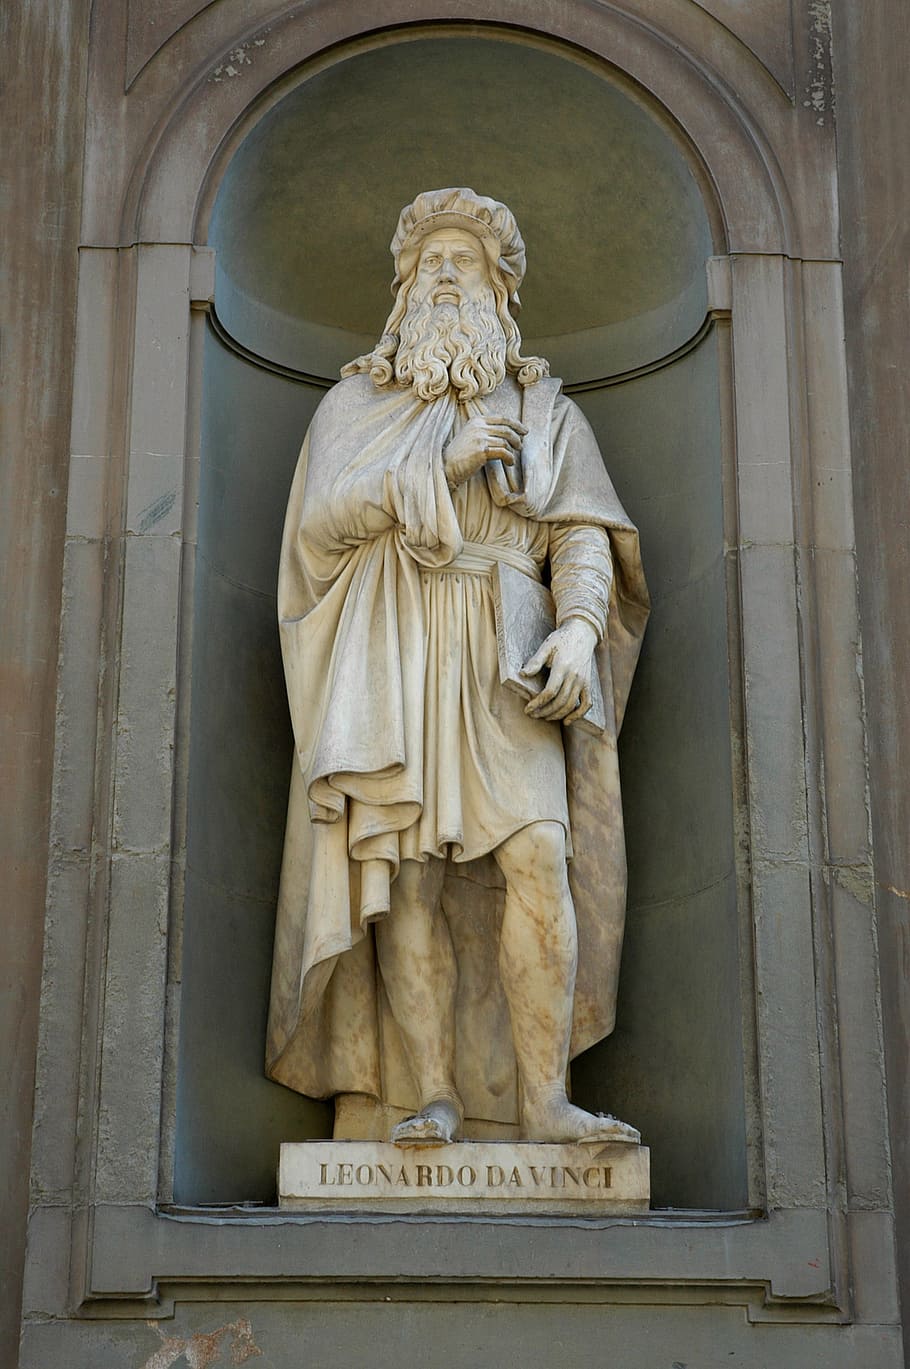 Leonardo Da Vinci, Inventor, intelligence, art and craft, sculpture, vertical, male, statue, architecture, church